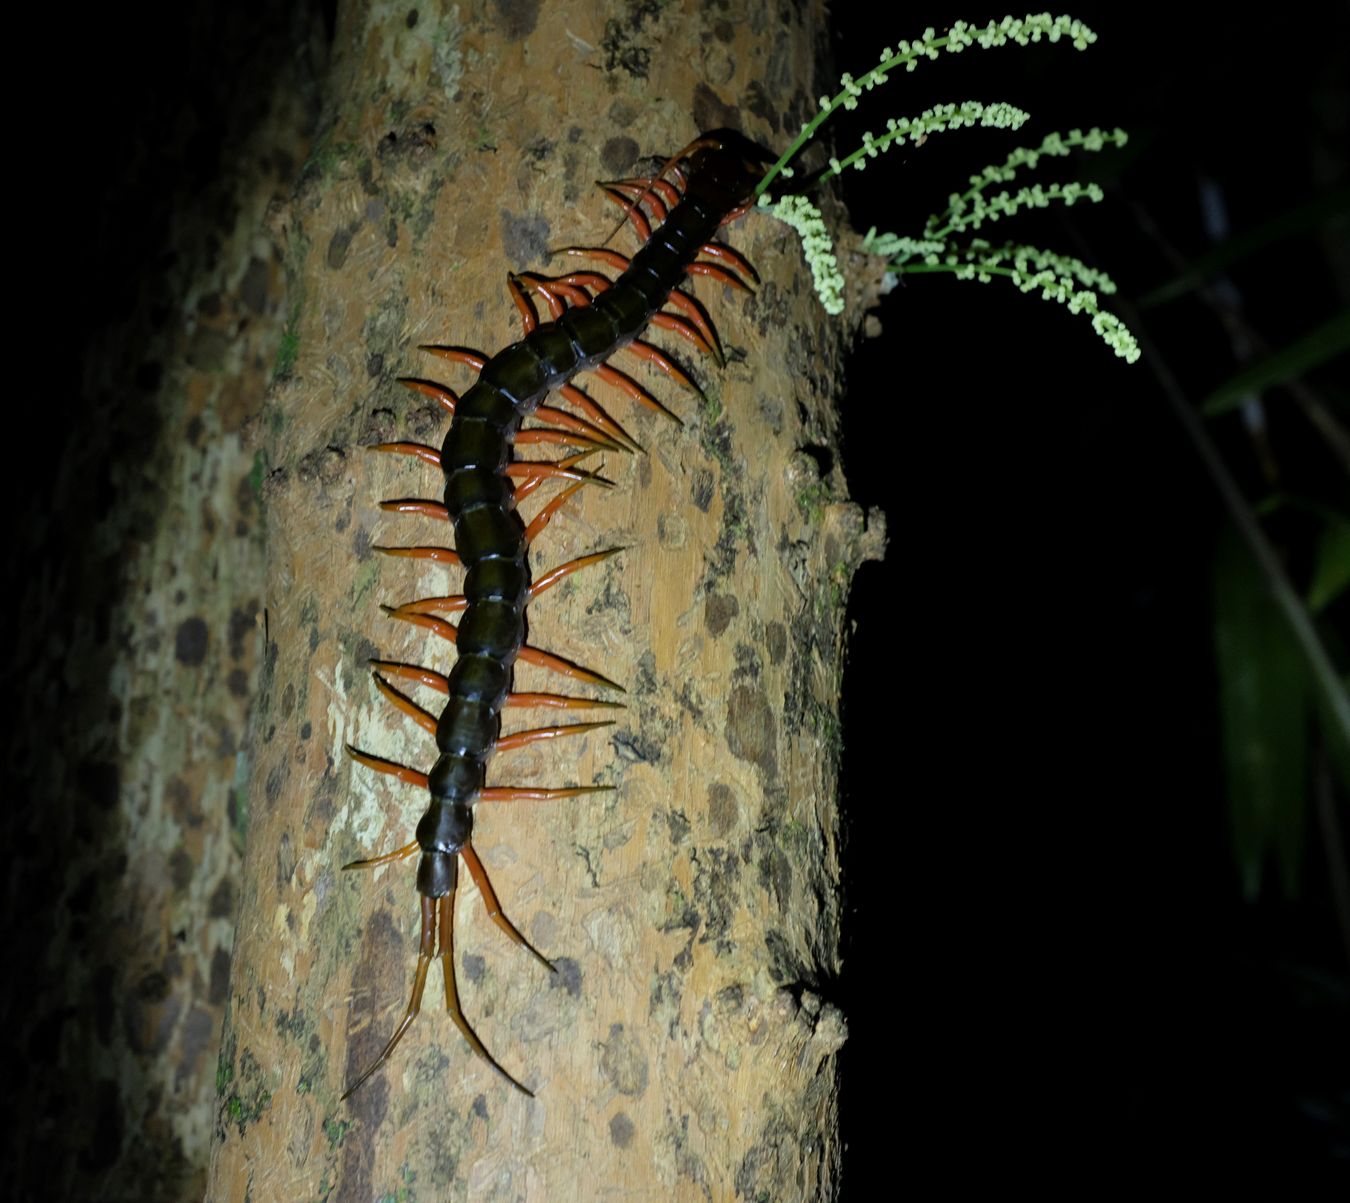 Orange-Legged Centipedes { Scolopendra Subspinipes }